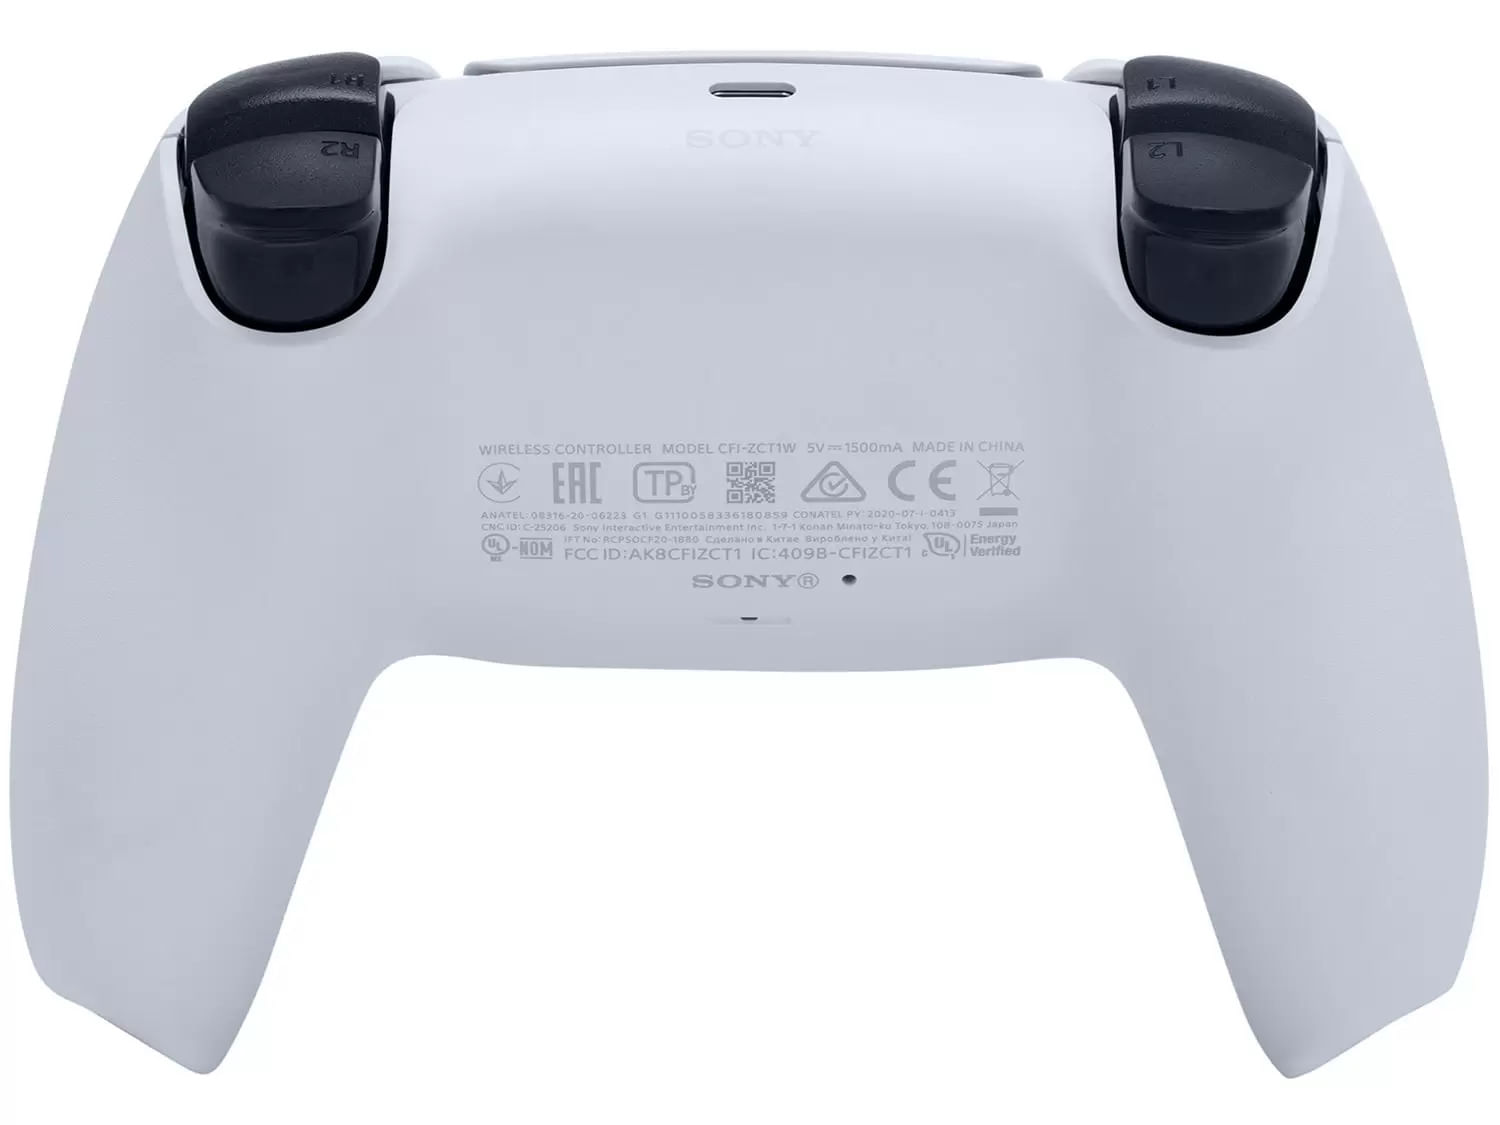 Porta jogos e controles PS5 (20 jogos e 2 controles)